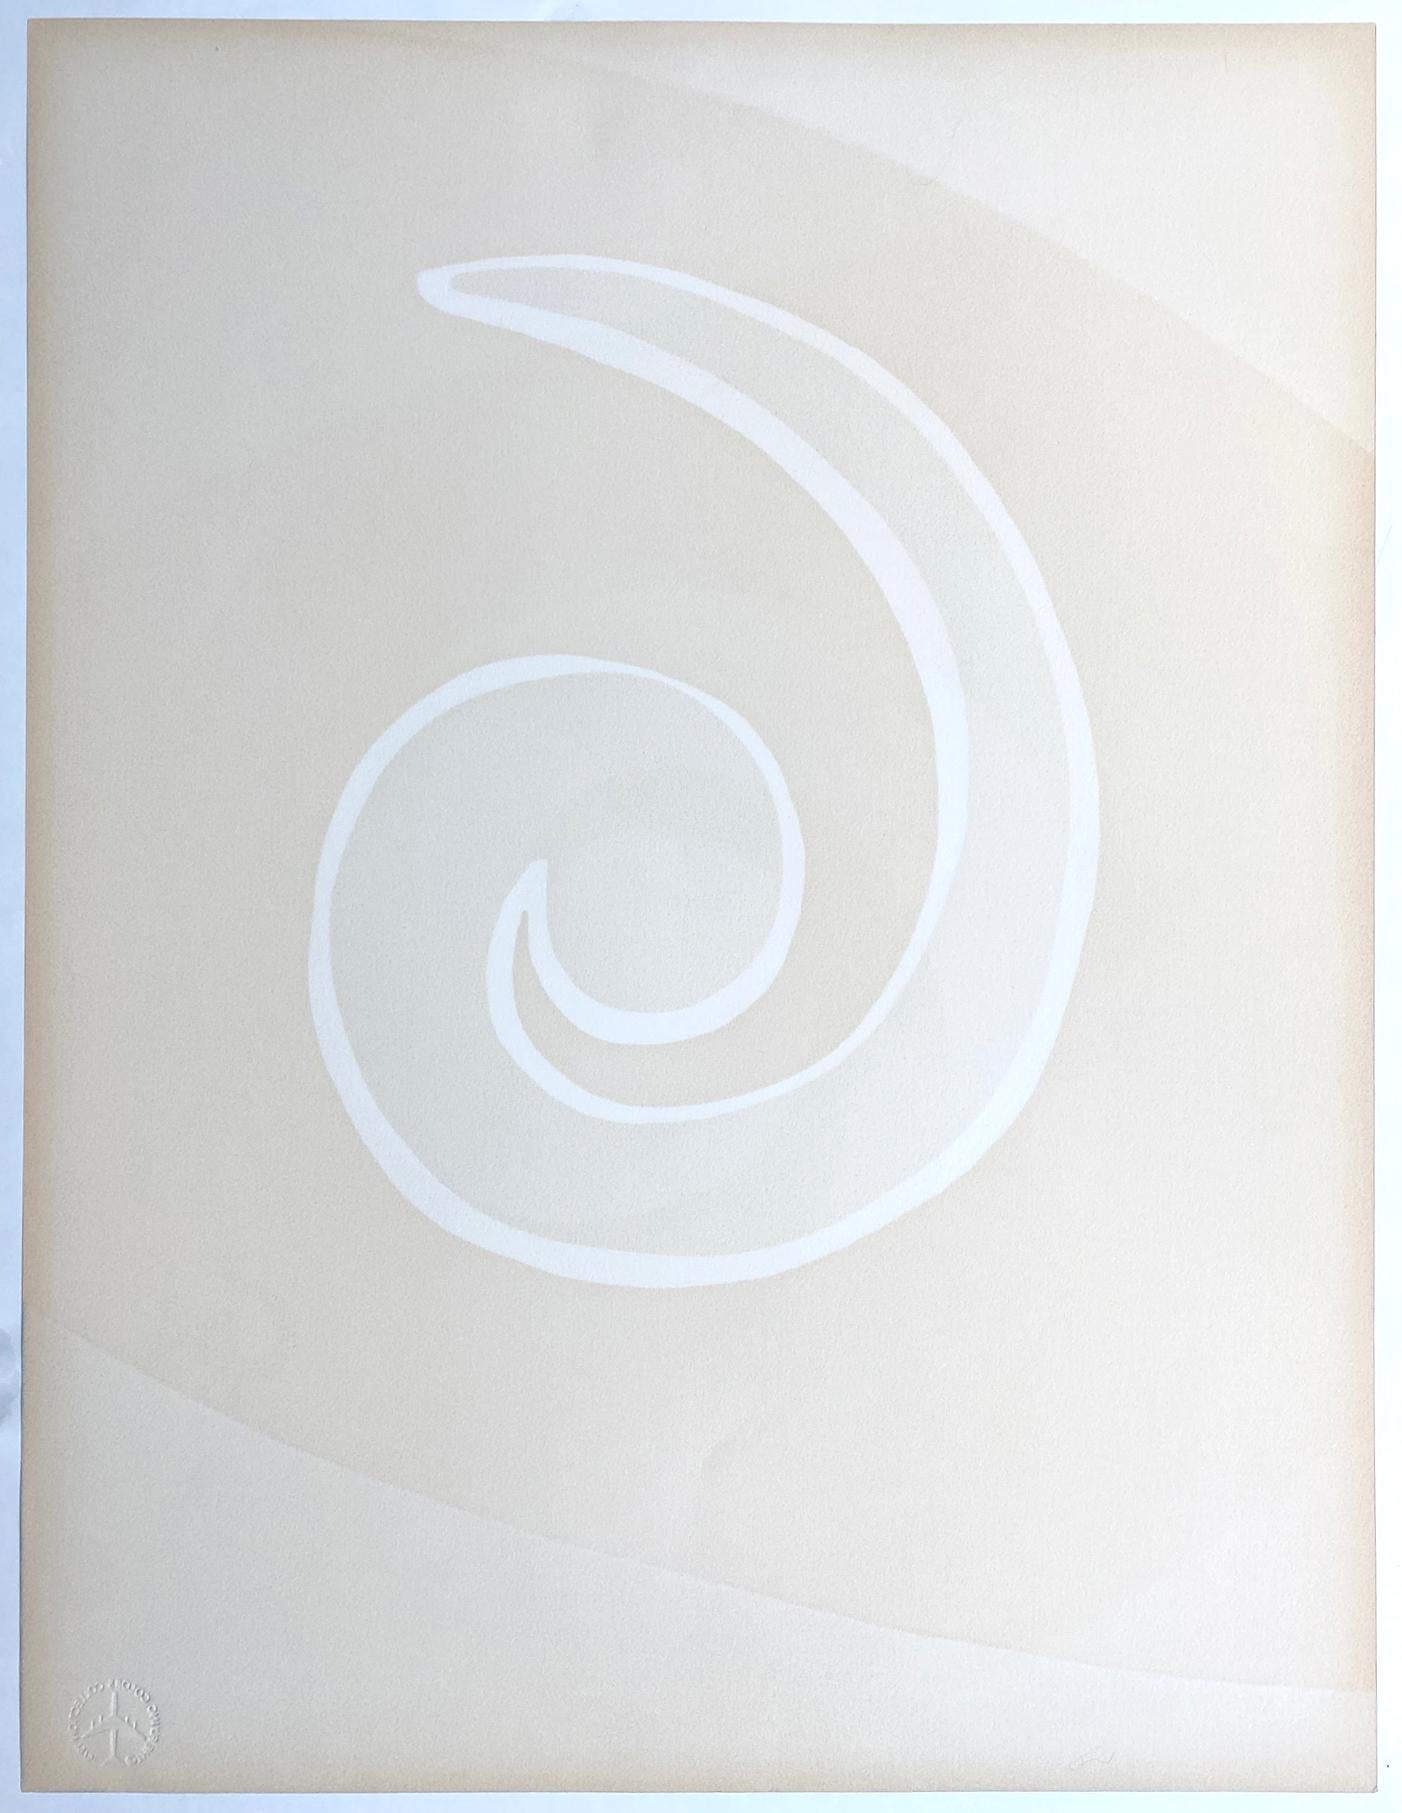 Swirl - Abstract Print by Alexander Calder